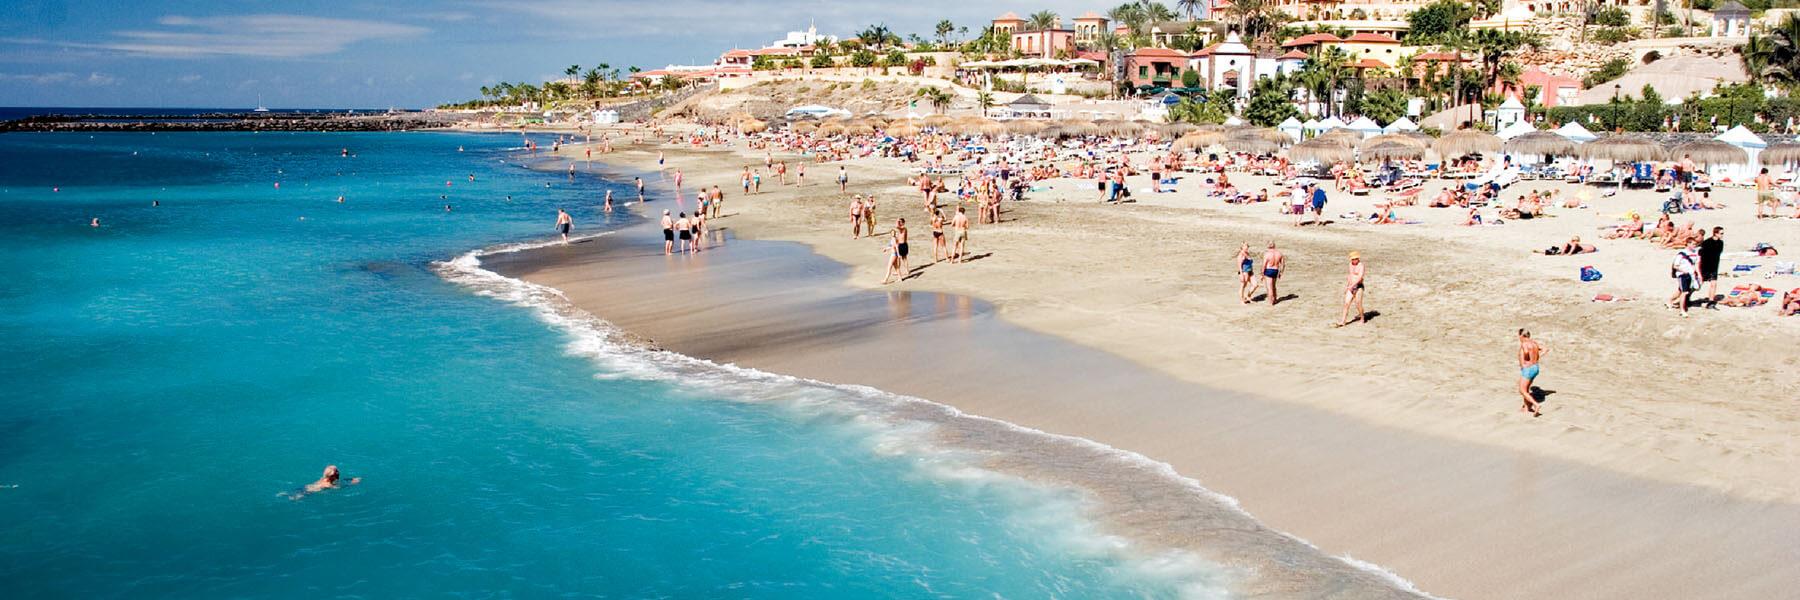 Playa de las Americas Holidays 2023 2024 | Thomas Cook